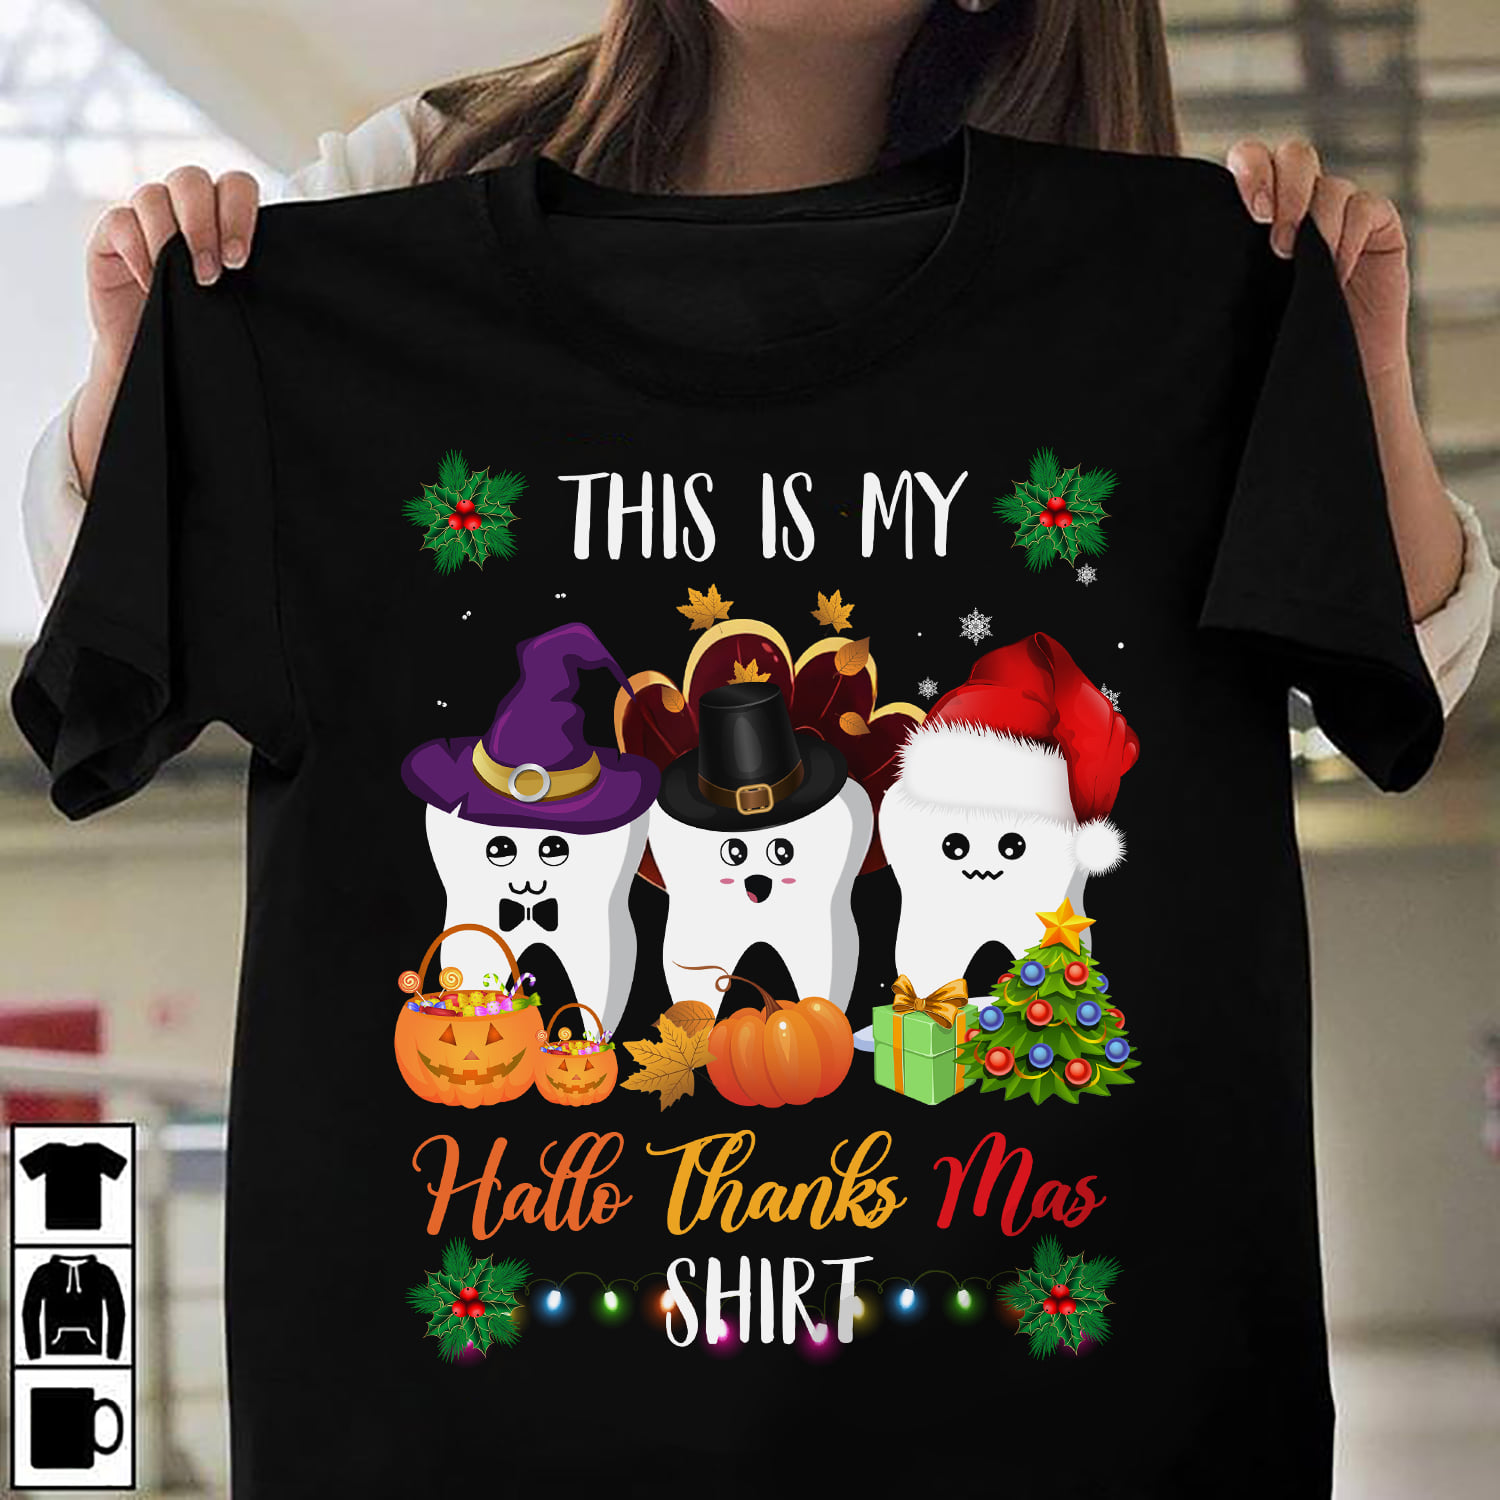 This is my HalloThanksMas shirt - Christmas day teeth, T-shirt for dentist